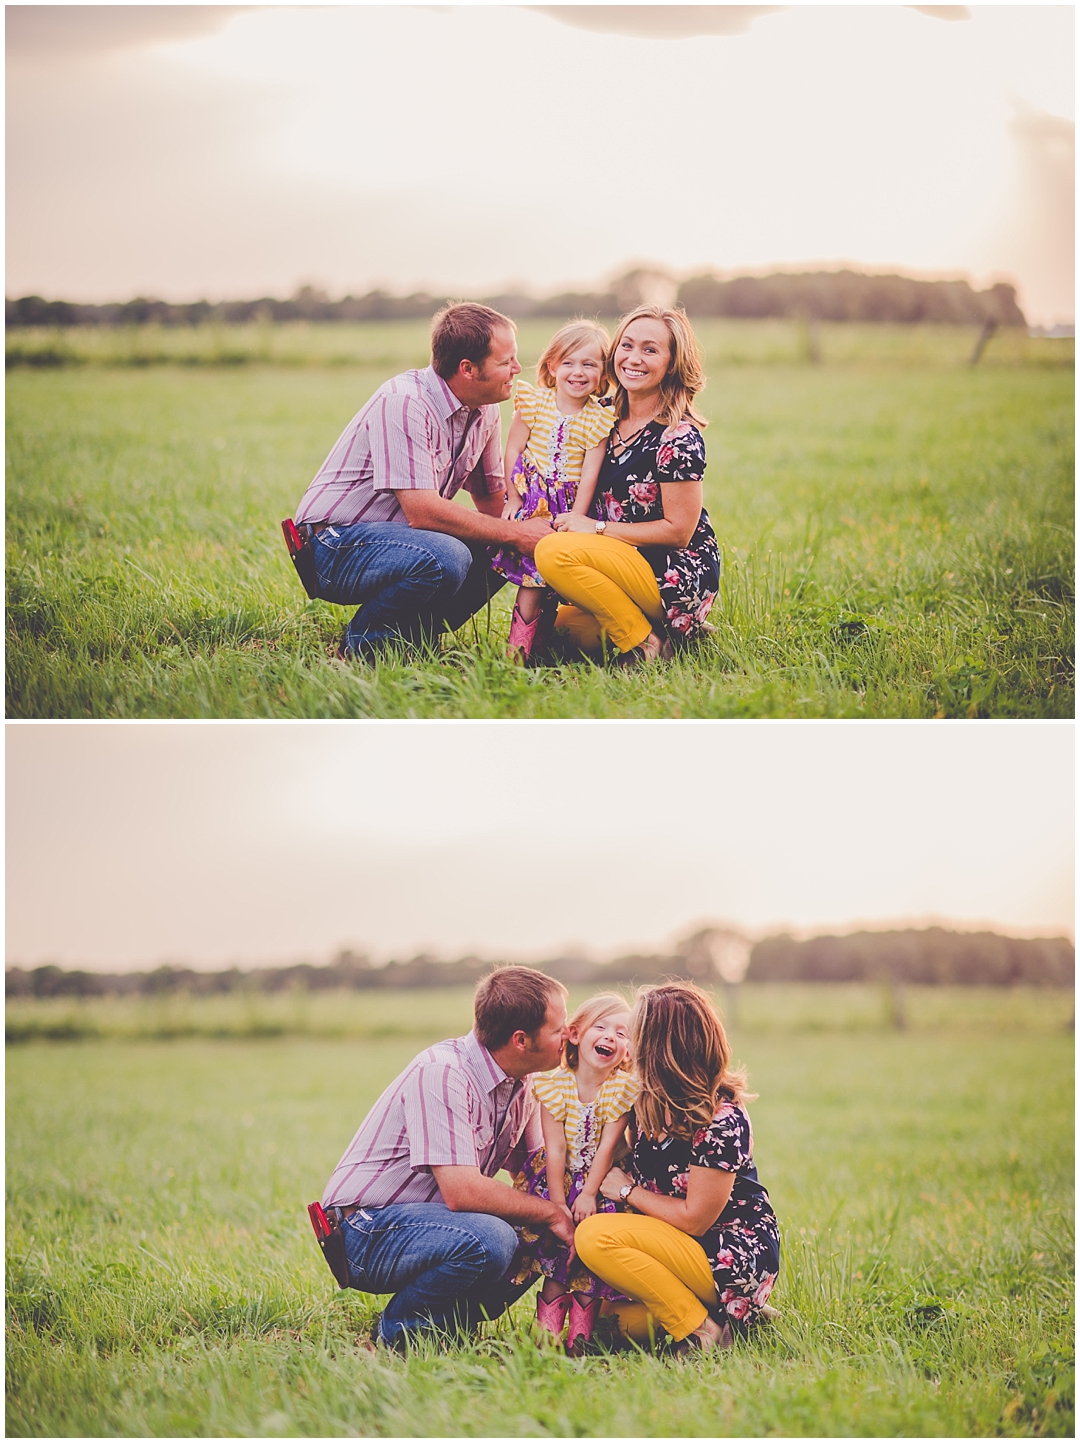 Kara Evans Photographer - Central Illinois Photographer - Iroquois County Family Photographer - Farm Family Photographer